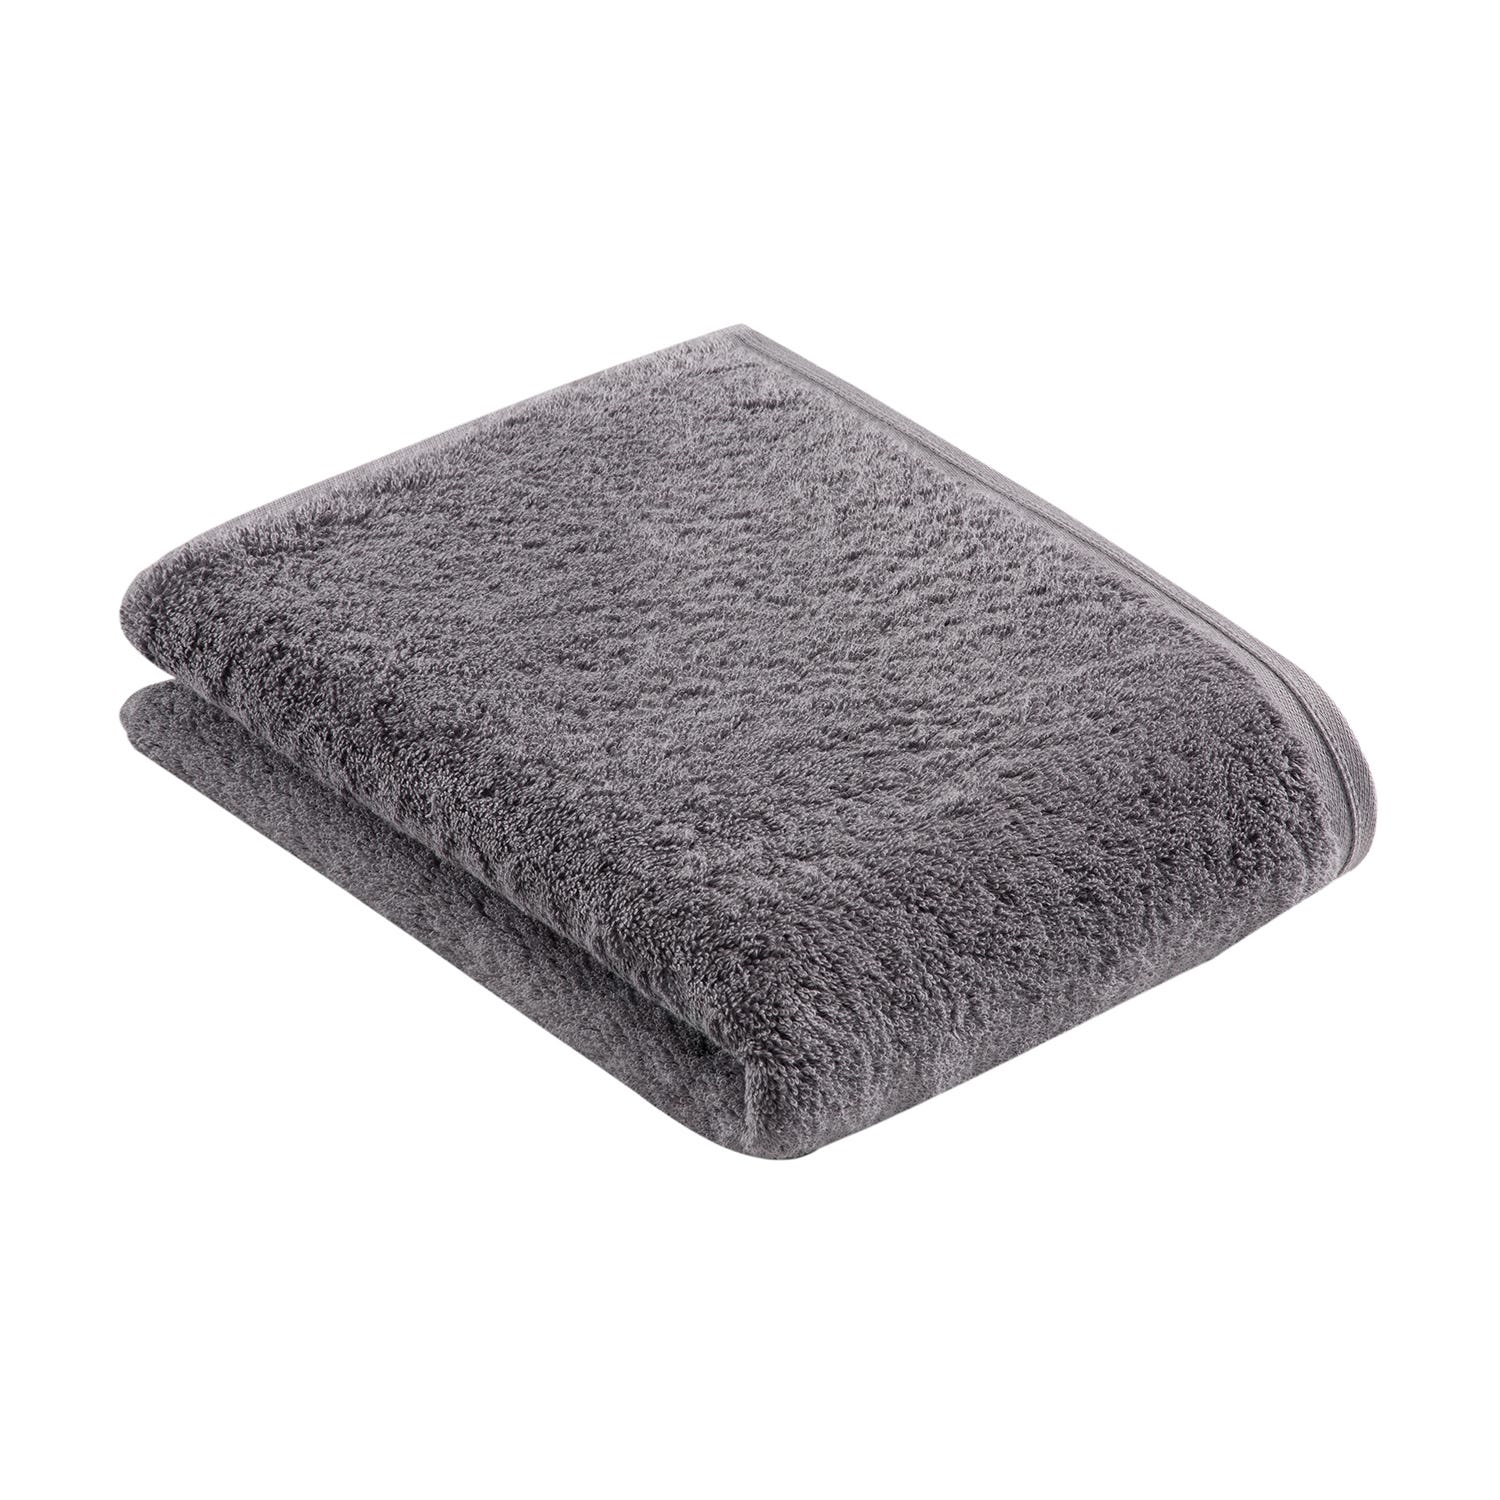 Vossen Vegan Life Bath Towel, Grey